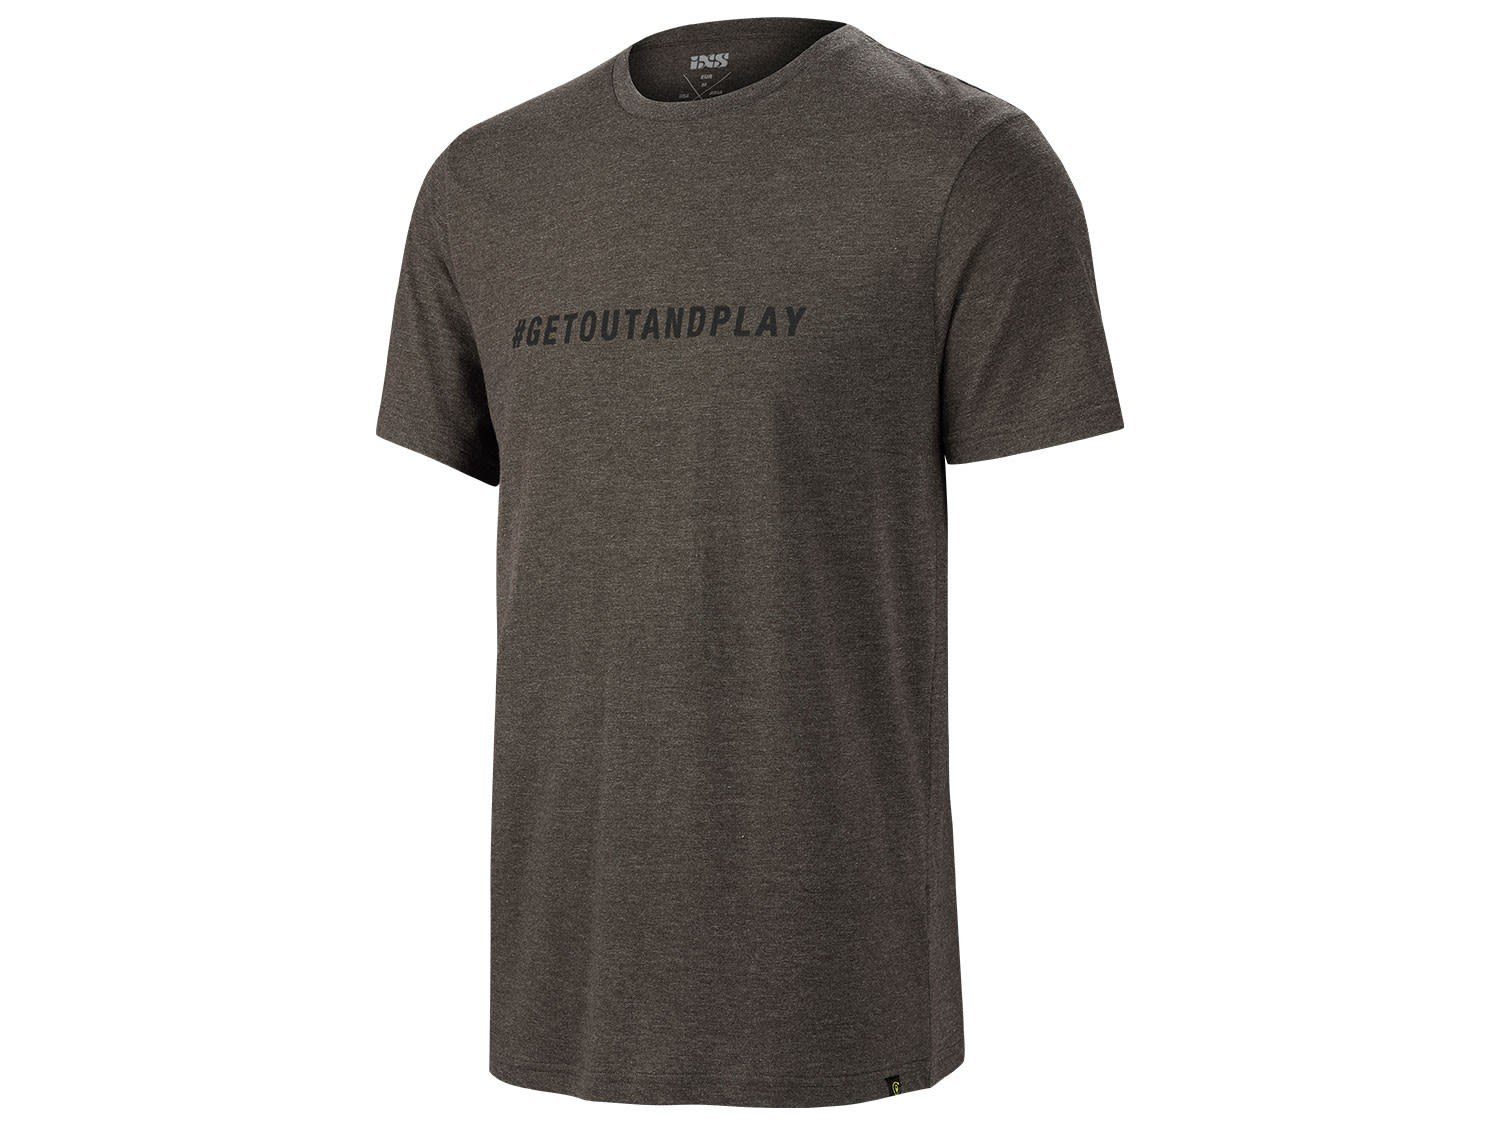 Kaffeebraun Herren Getoutandplay Ixs M T-Shirt Cotton IXS T-shirt Organic